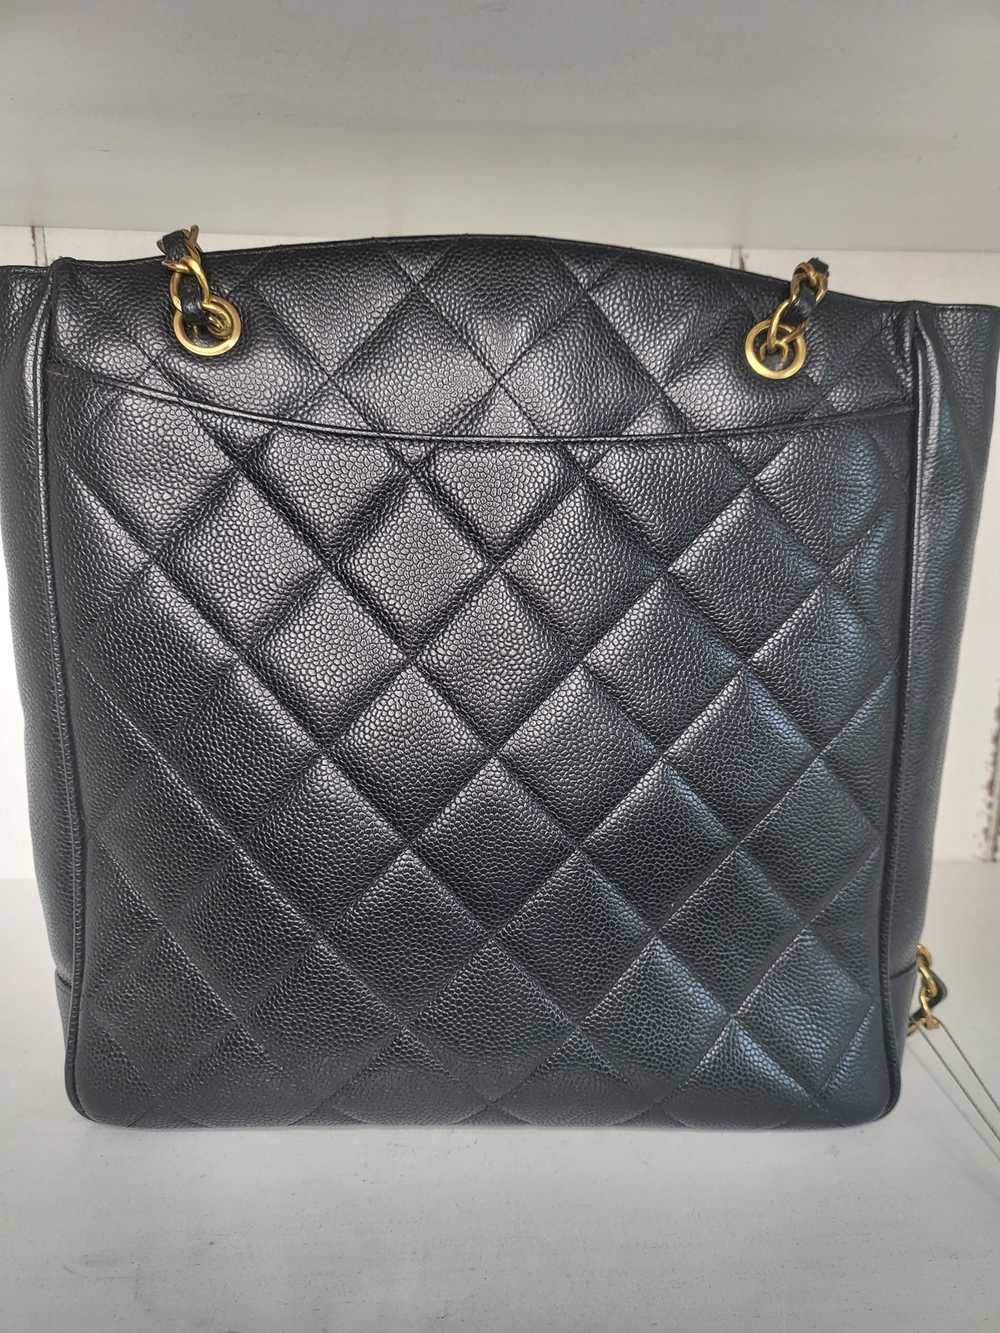 Chanel Vintage Chanel tote bag - image 3